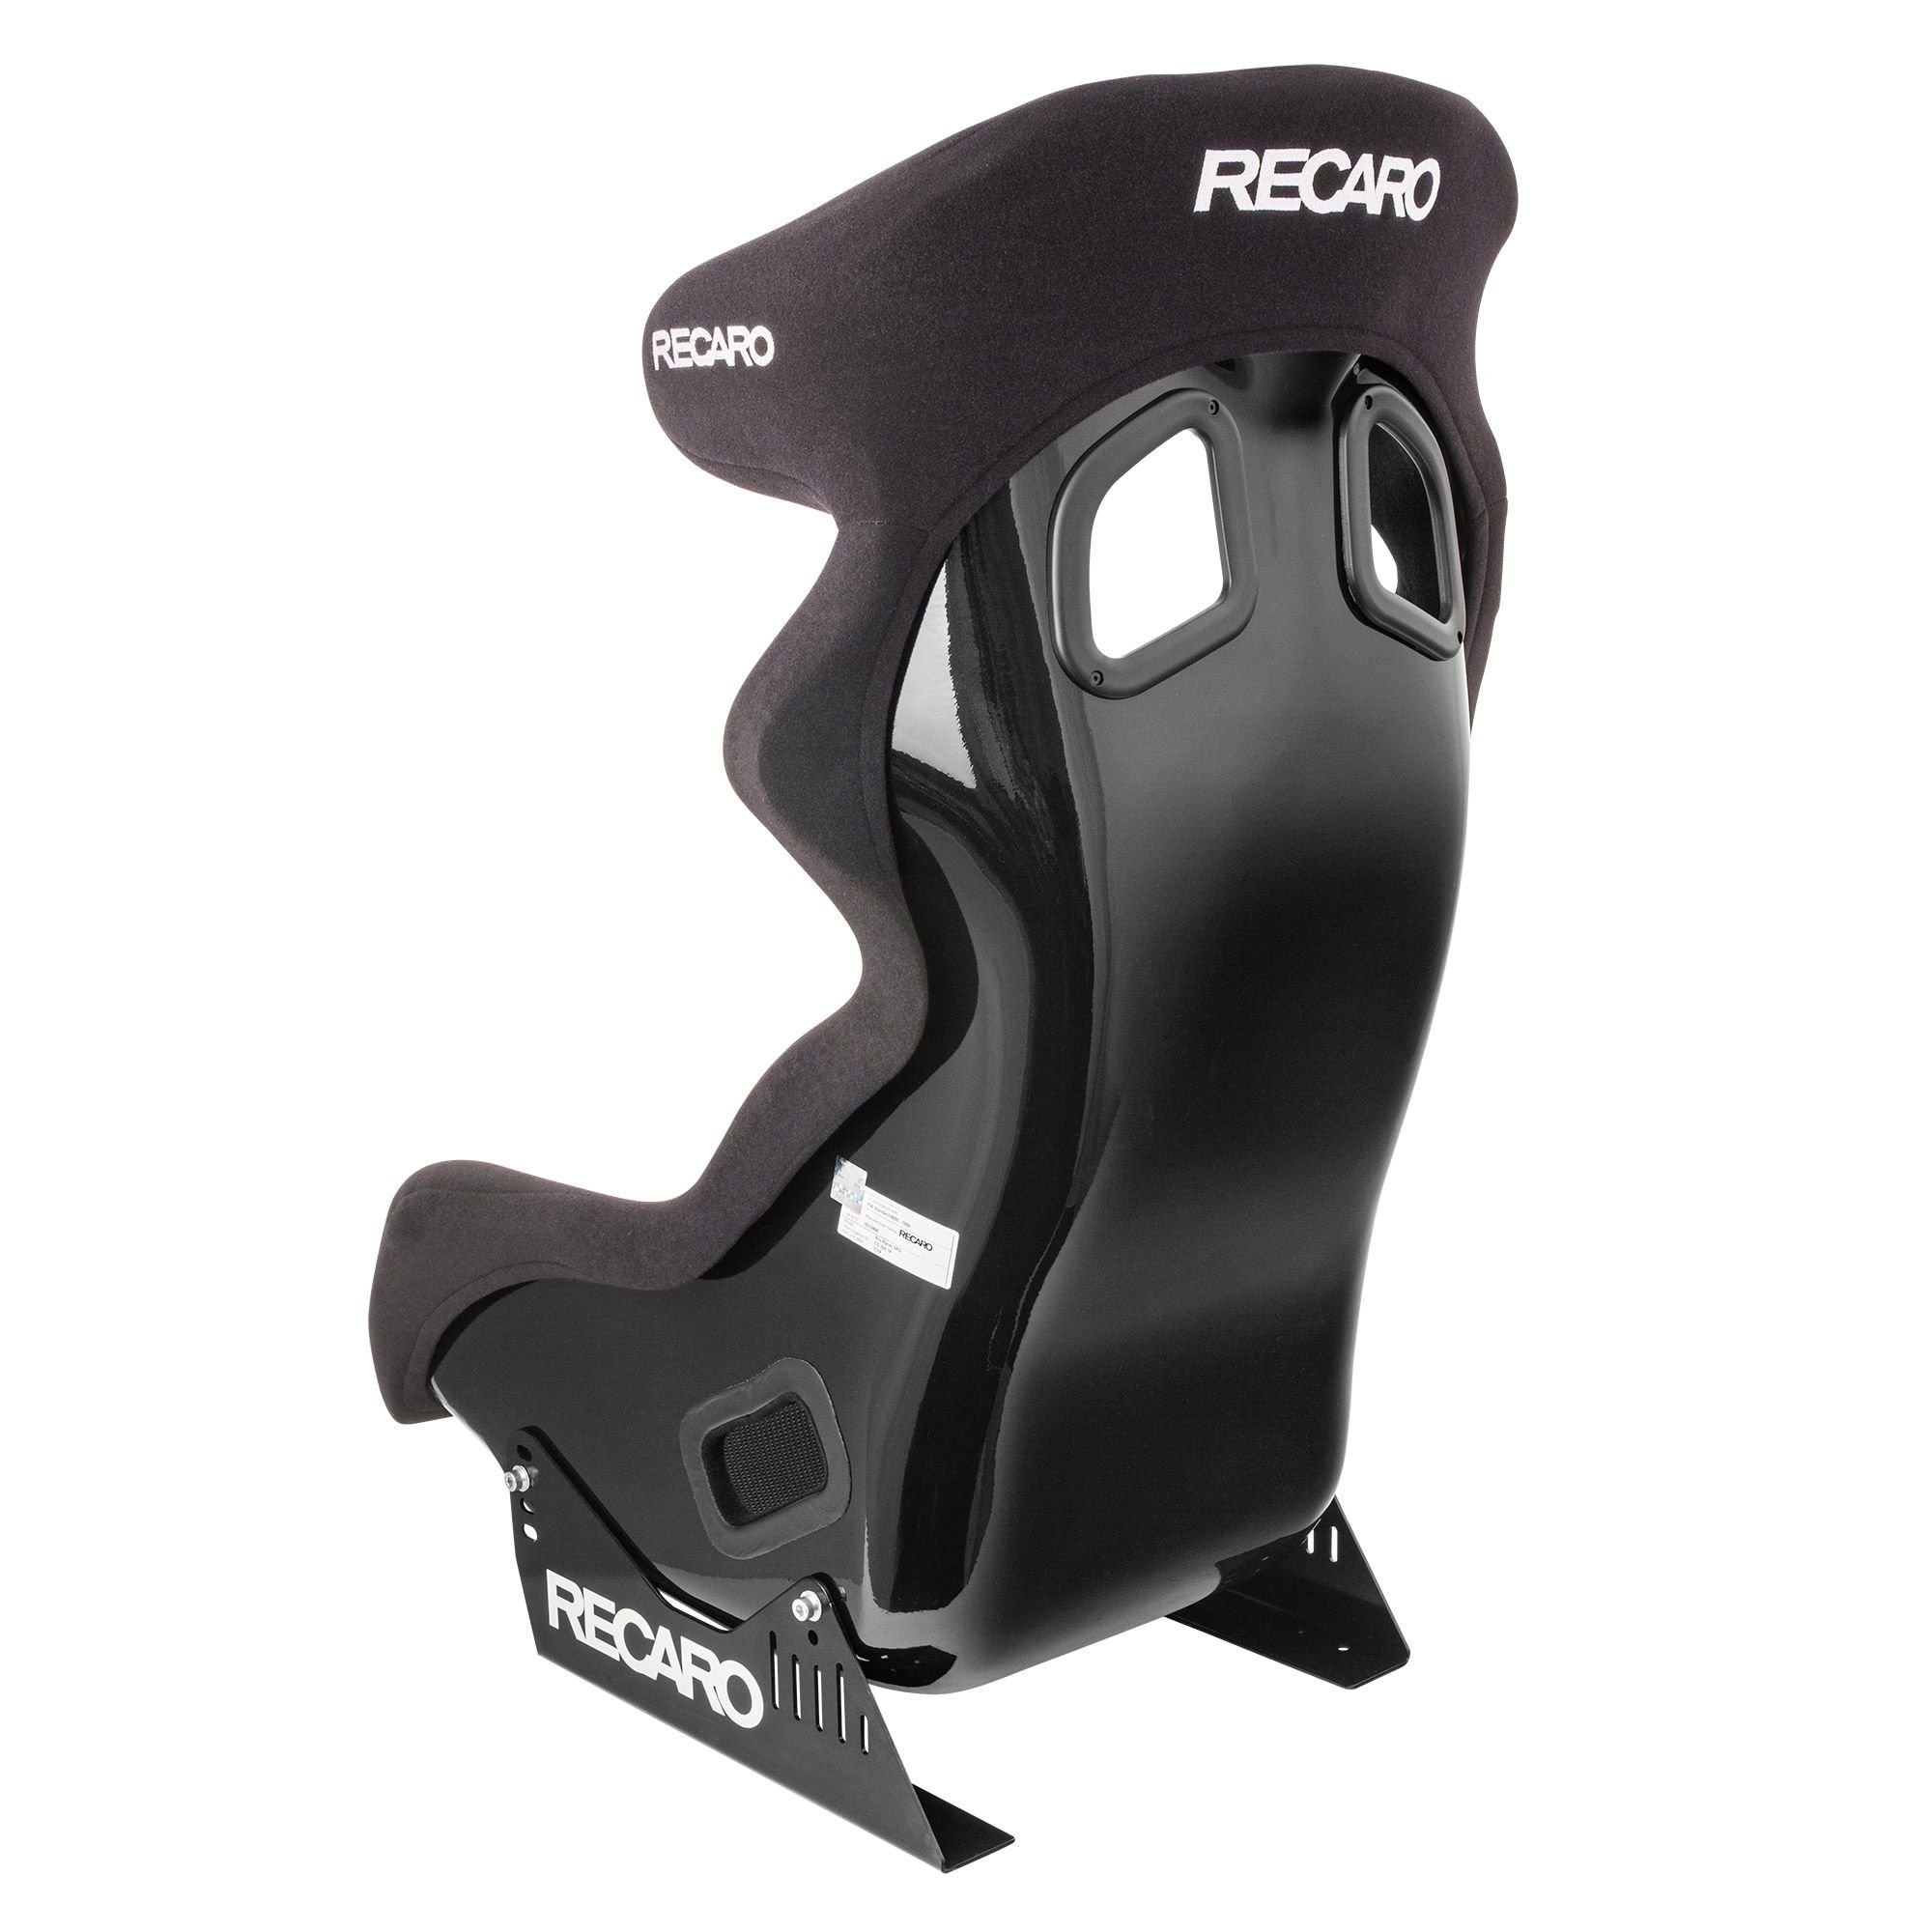 Recaro Pro Racer SPG FIA Seat — Track First